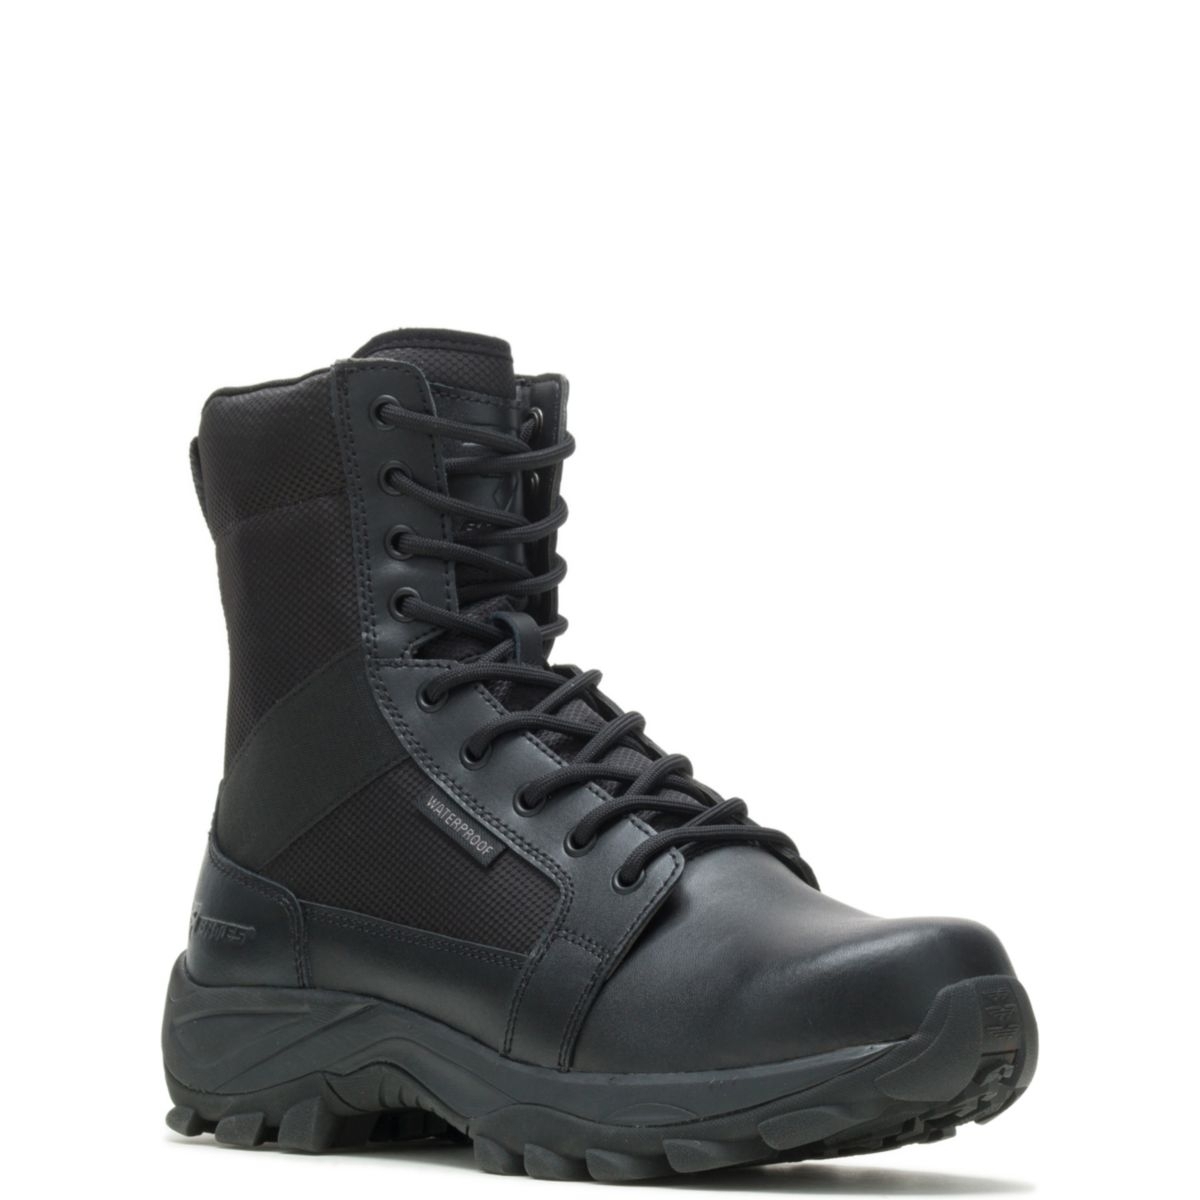 Bates Men's Fuse 8-inch Side Zip Waterproof Boot Black - E06508 BLACK - BLACK, 10